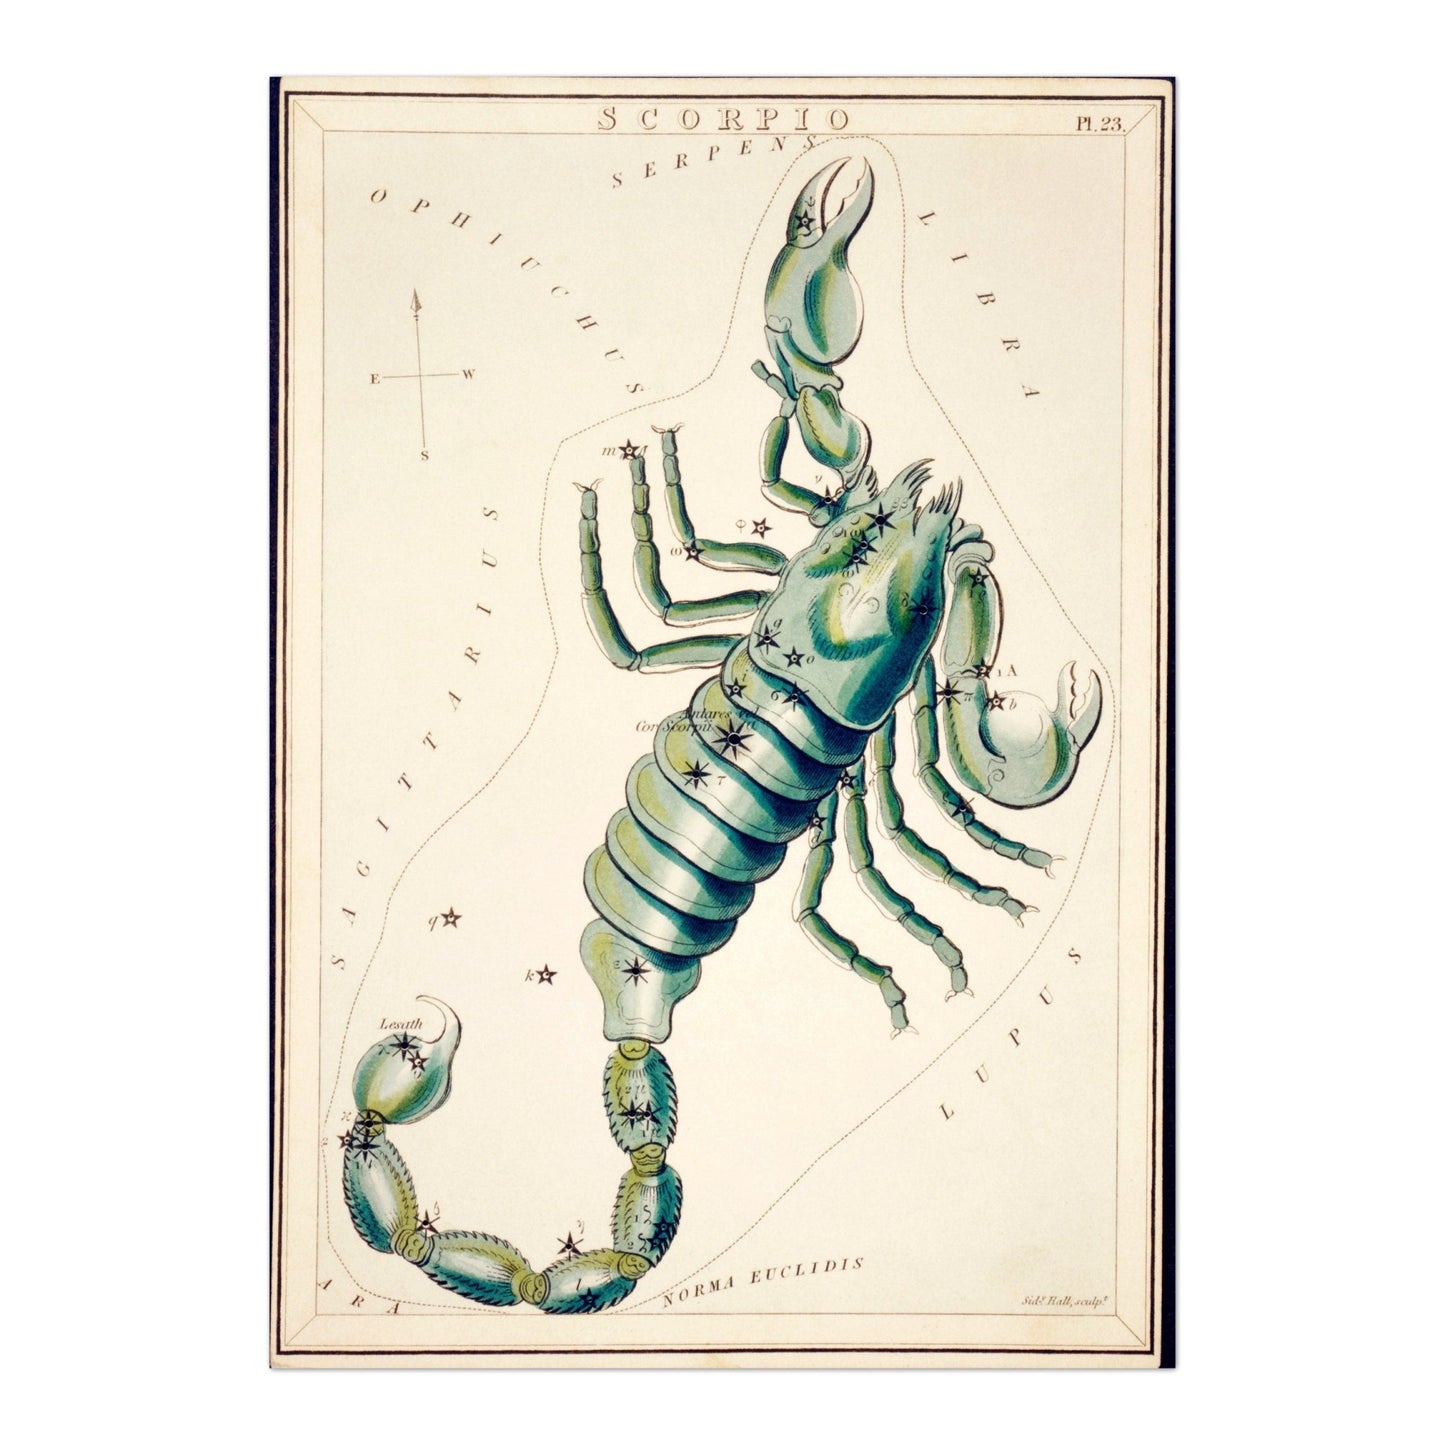 SCORPIO - Constellation of a Scorpion